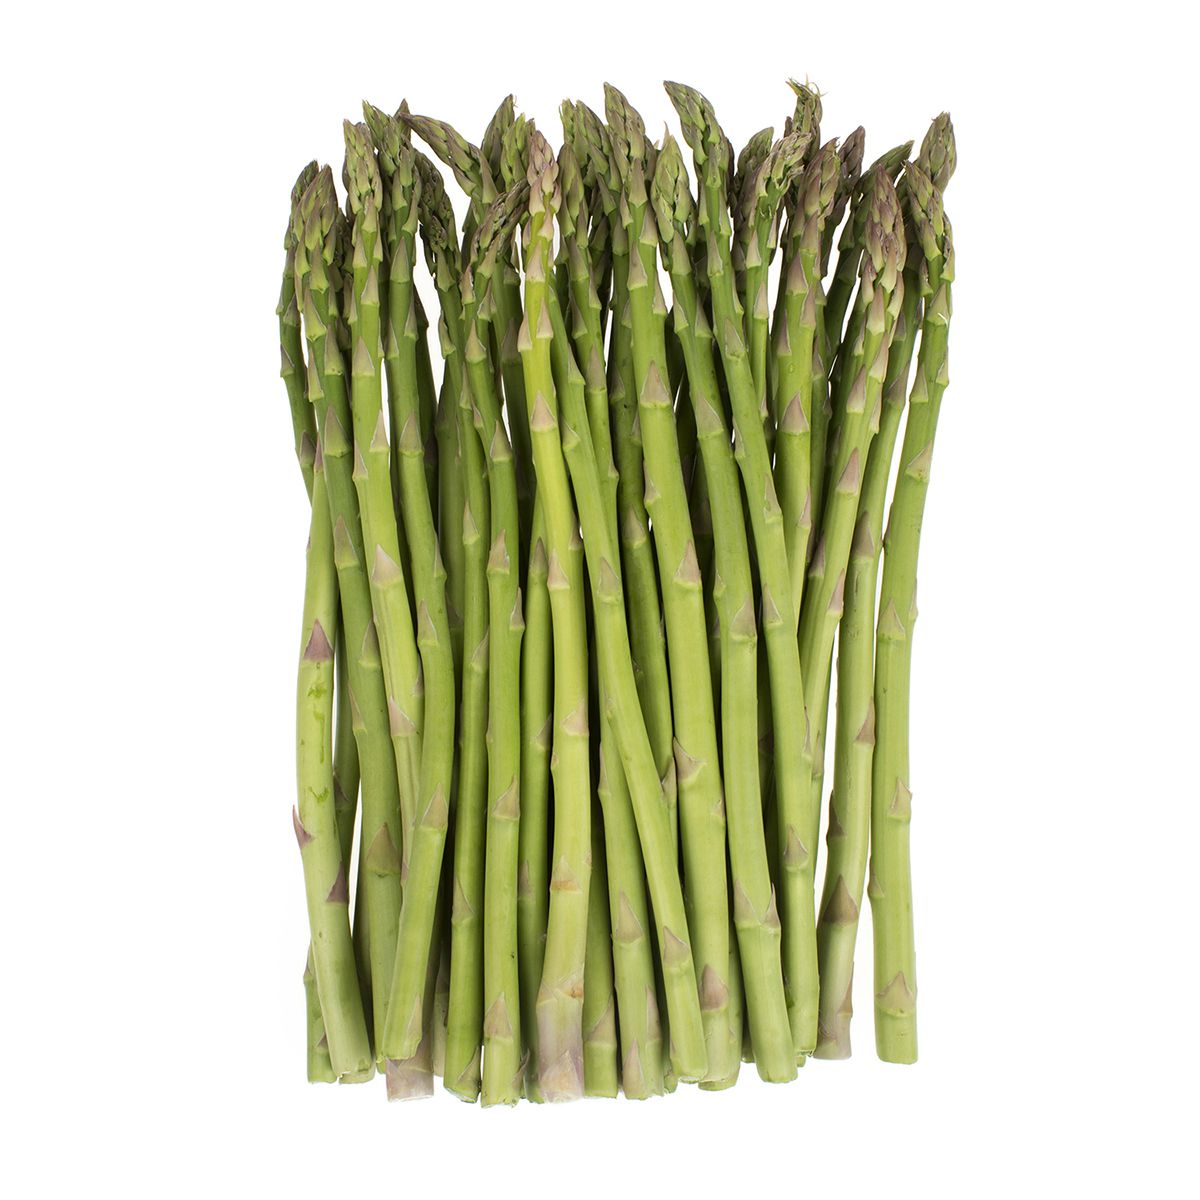 BoxNCase Organic Standard Asparagus